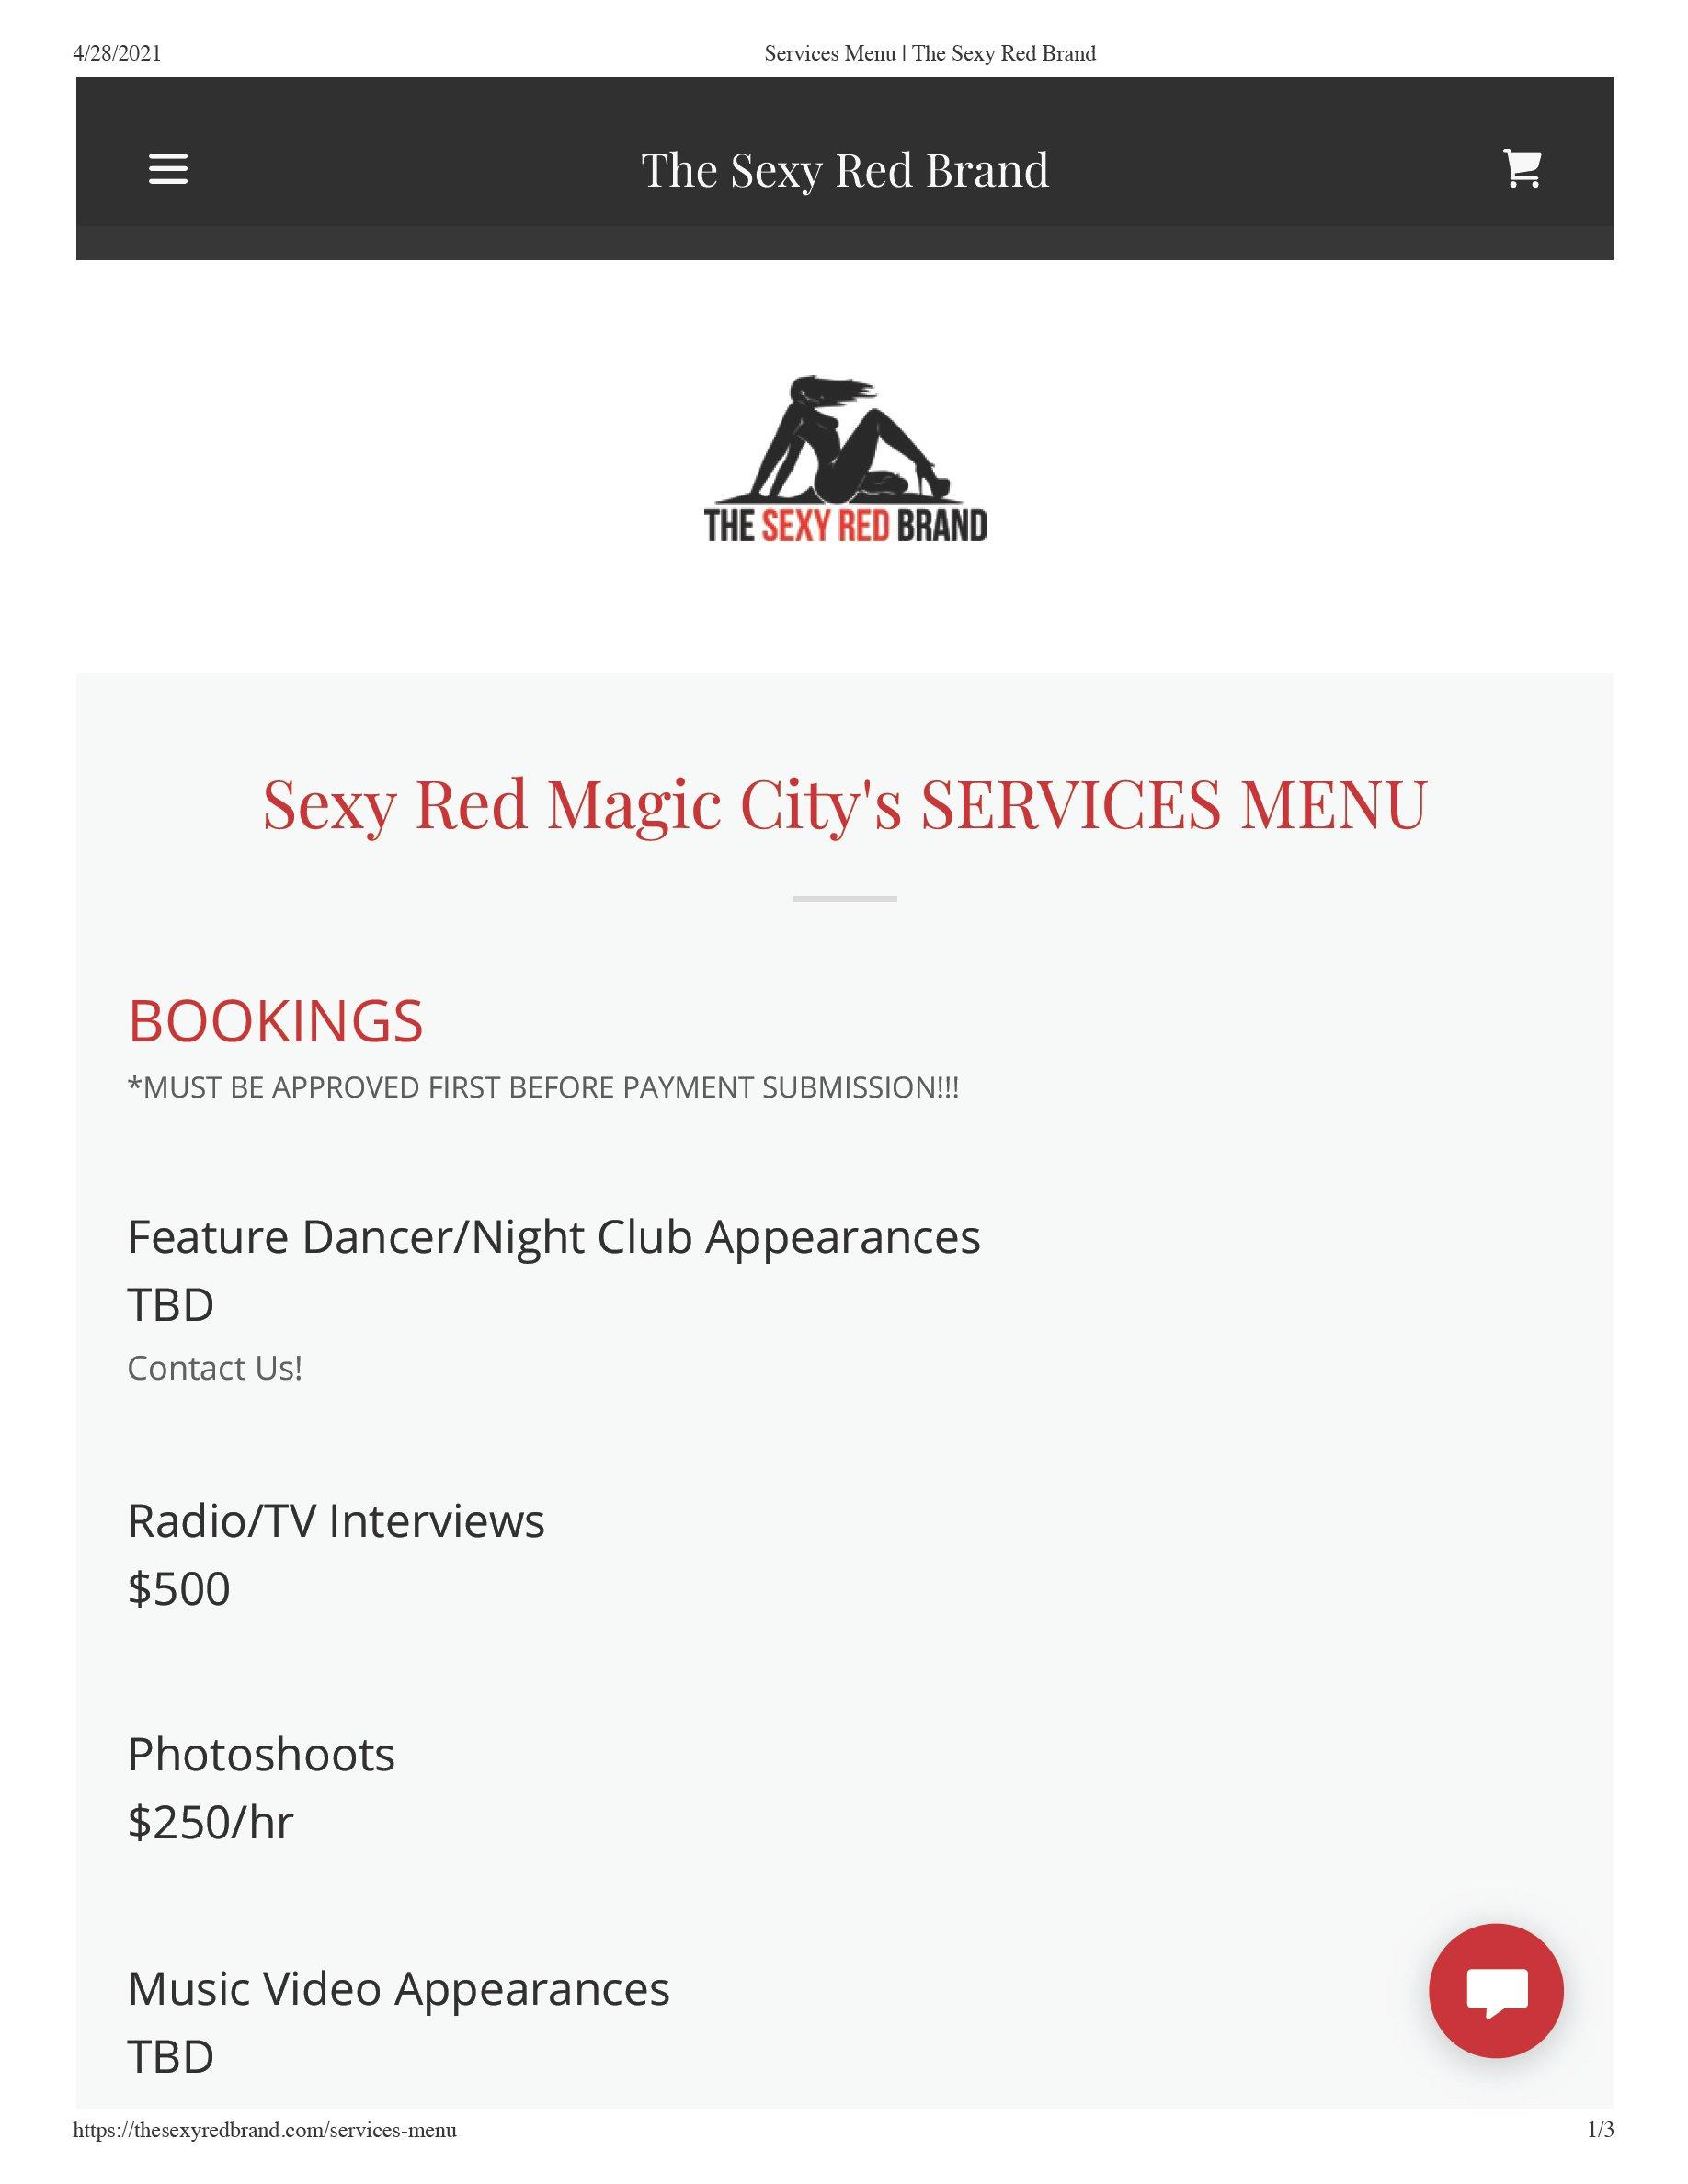 Sexy red magic city